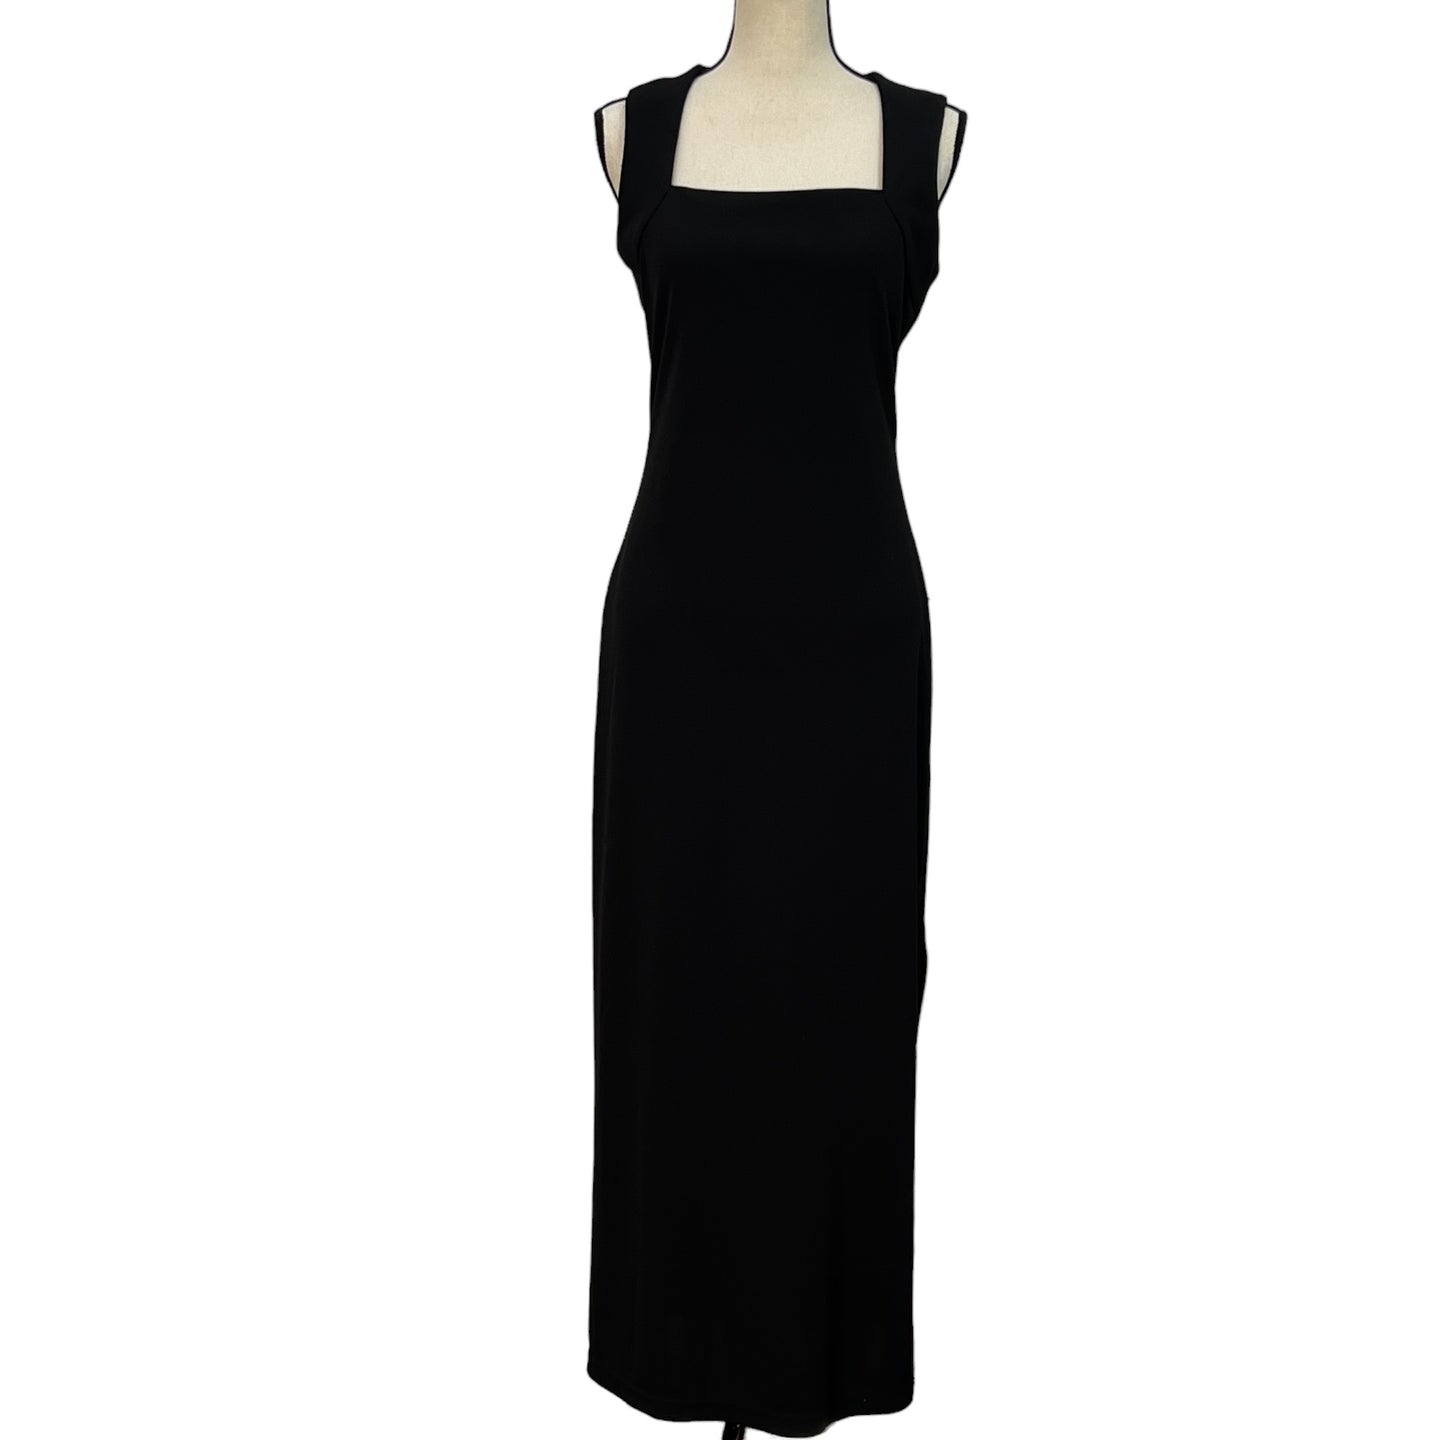 90's Square Neck Scoop Back Long Black Dress Size Medium 